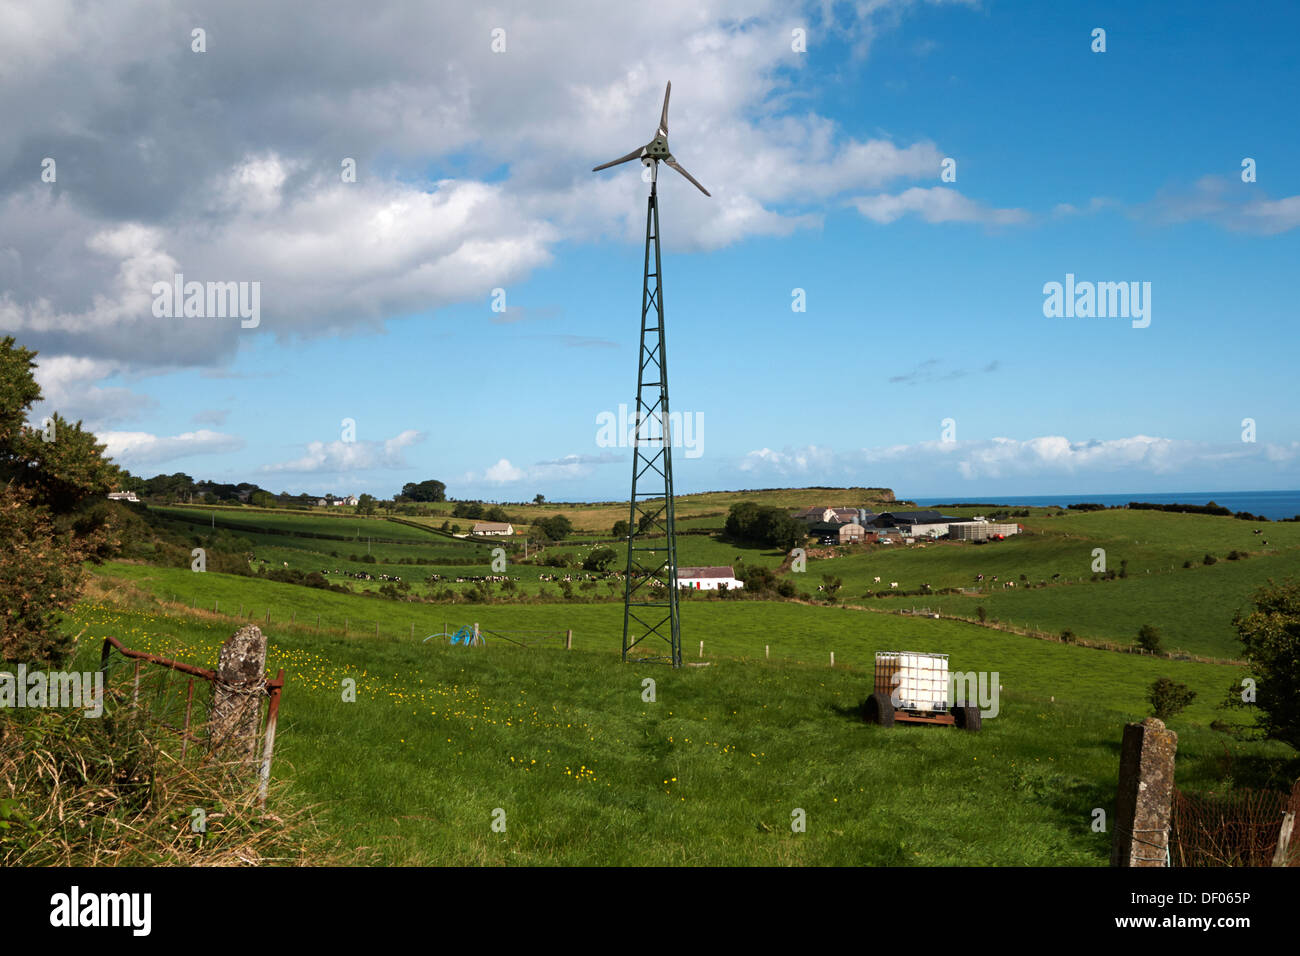 small wind turbine powering remote rural farm in northern ireland Stock Photo